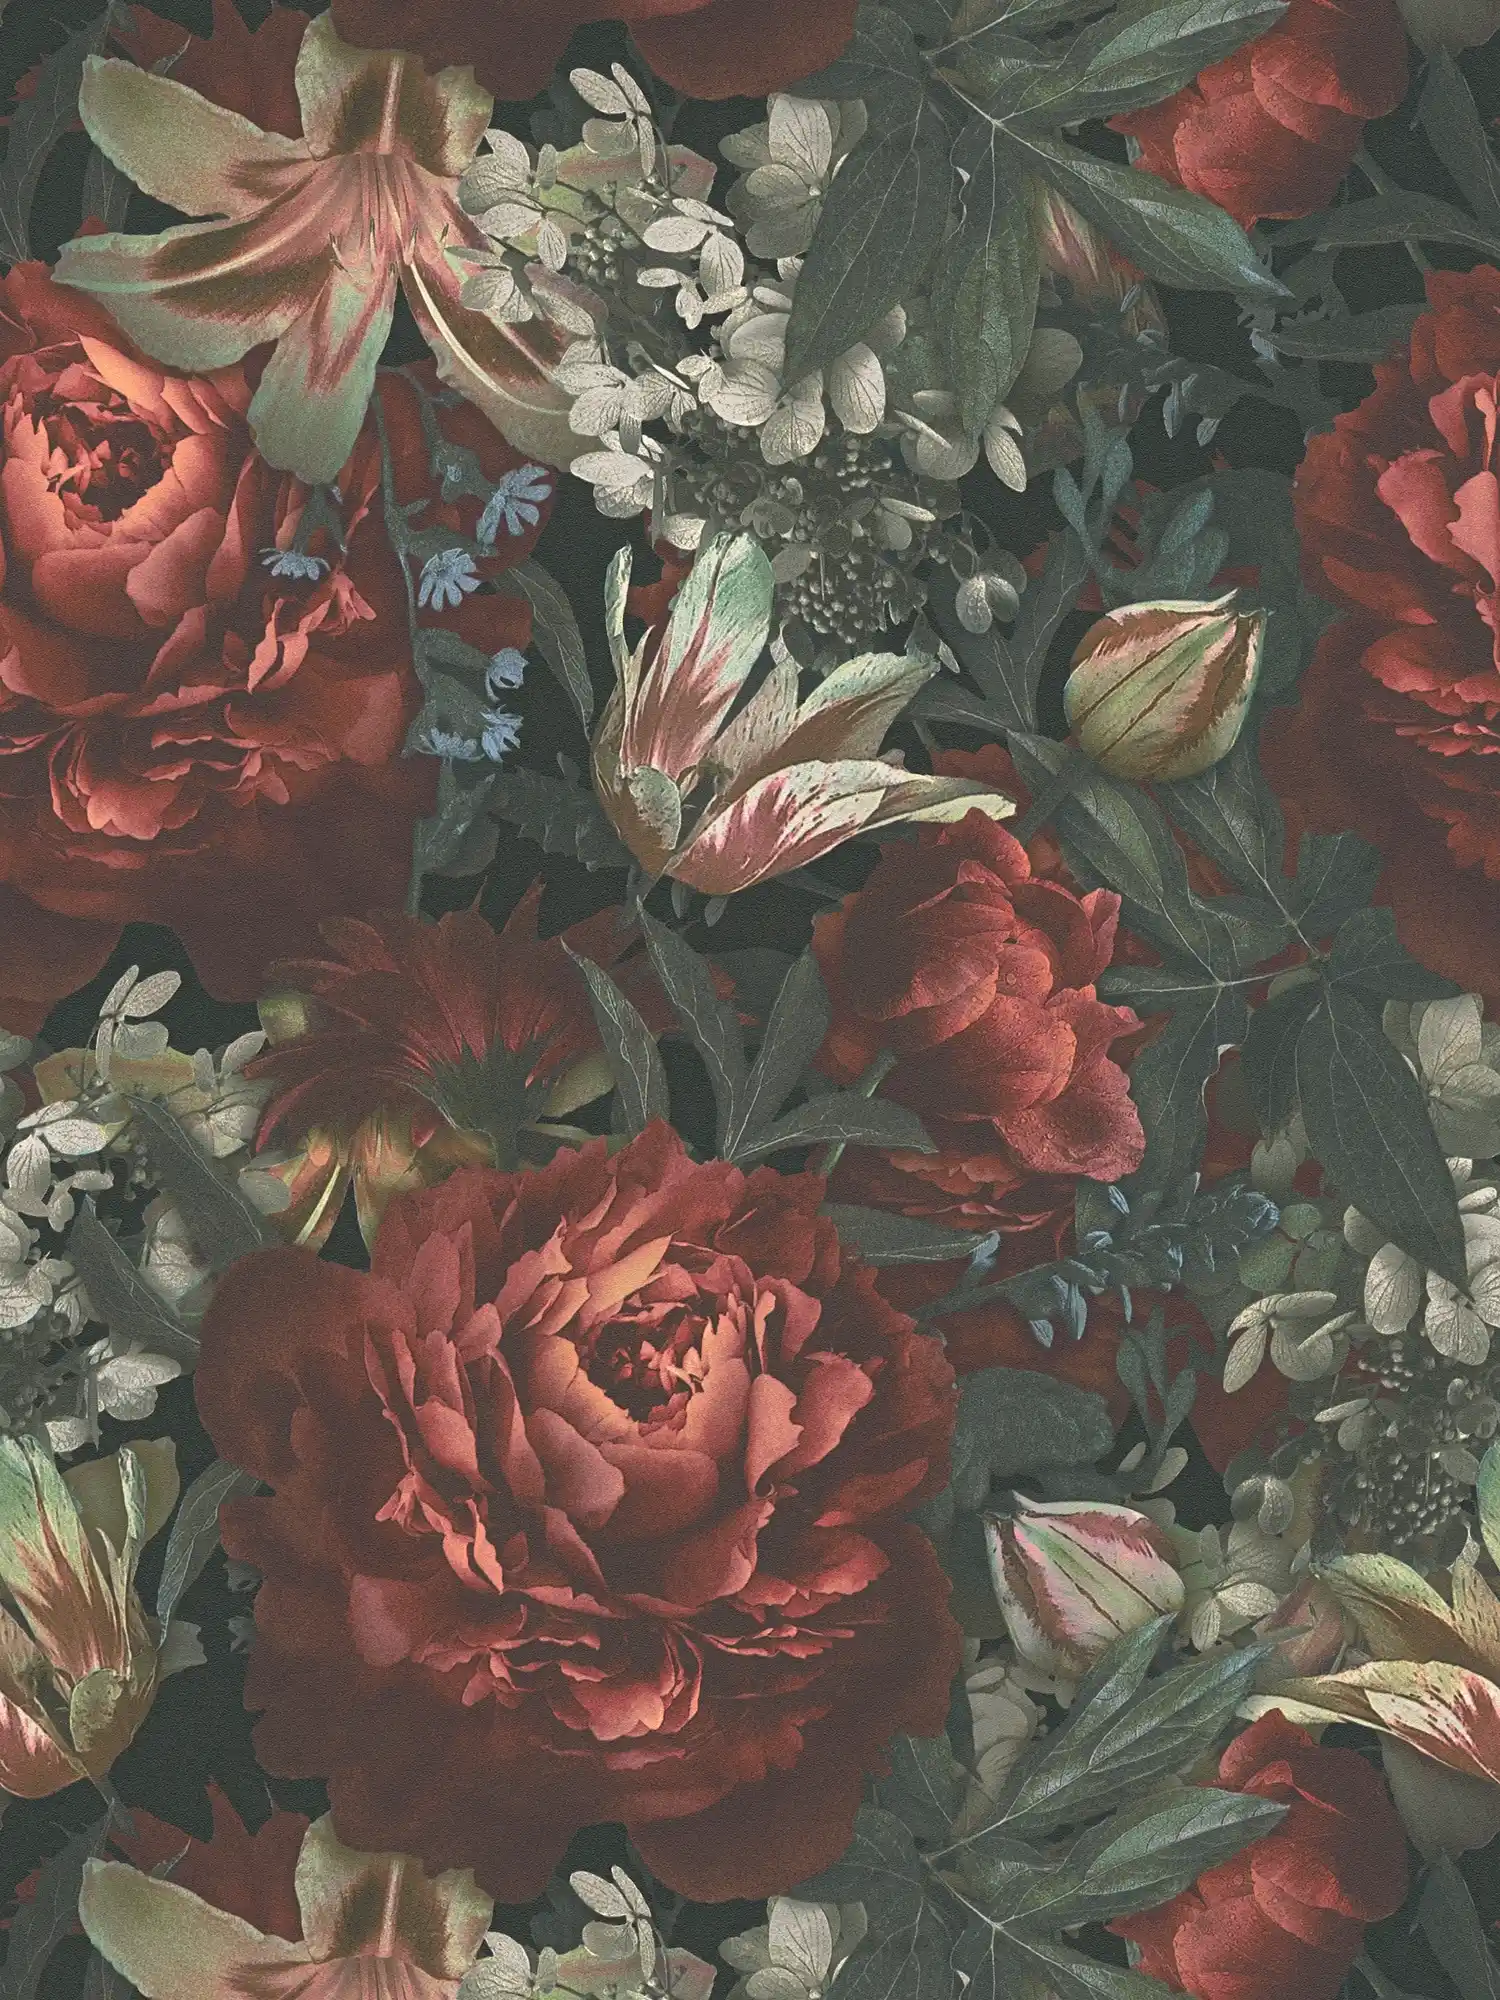 Bloemenbehang rozen & tulpen vintage stijl - groen, rood, crème
